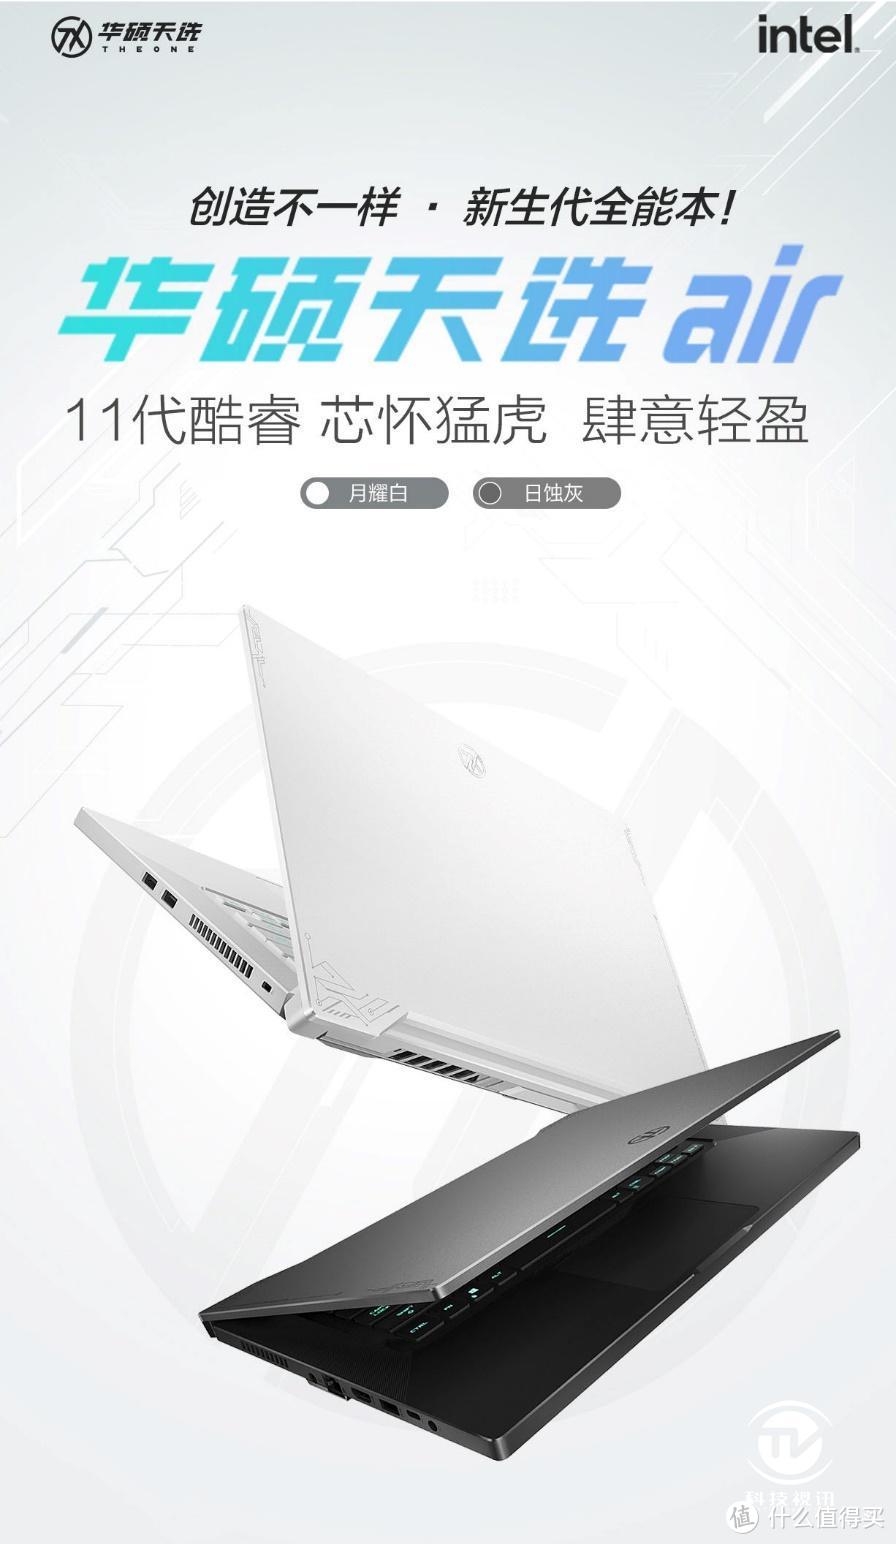 年中無休】 Asus 15.6 Notebook i7 GTX1080 Maxq